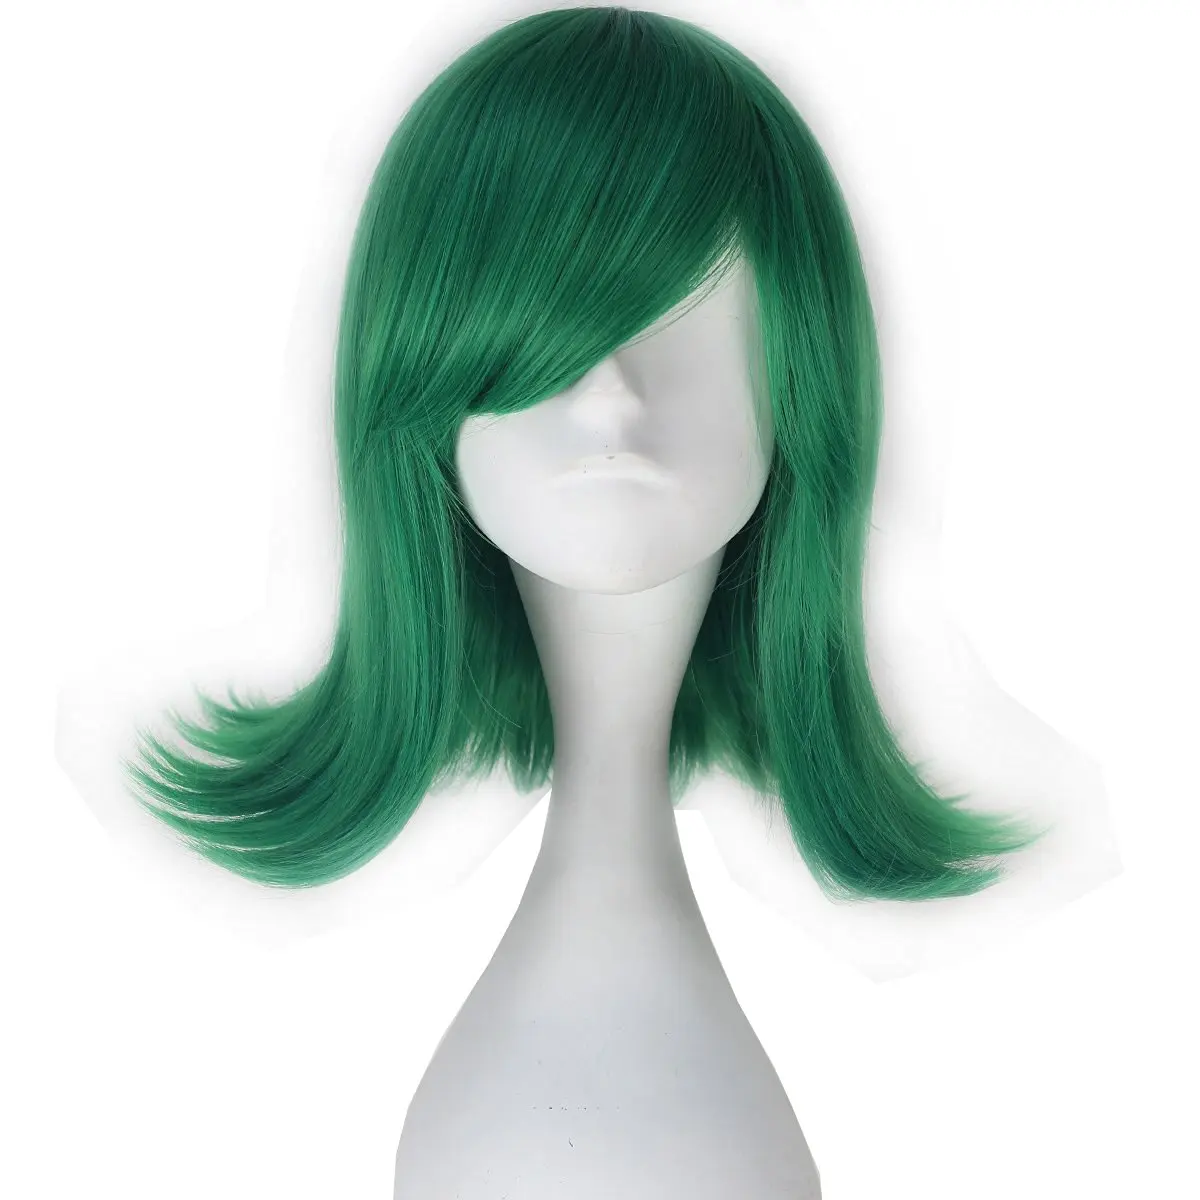 17.99. Miss U Hair Girl Adult Synthetic Short Wavy Green Hair Anime Cosplay...